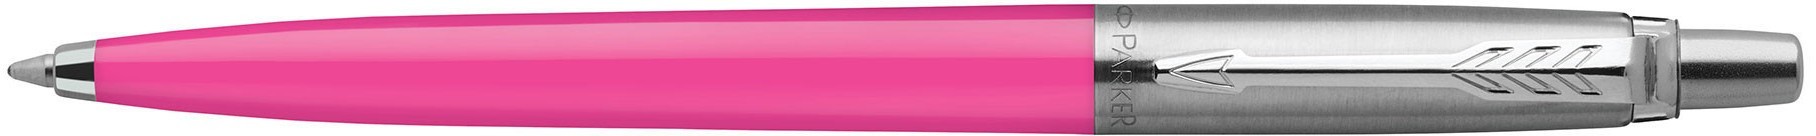 Шариковая ручка Parker Jotter Original K60 Hot pink